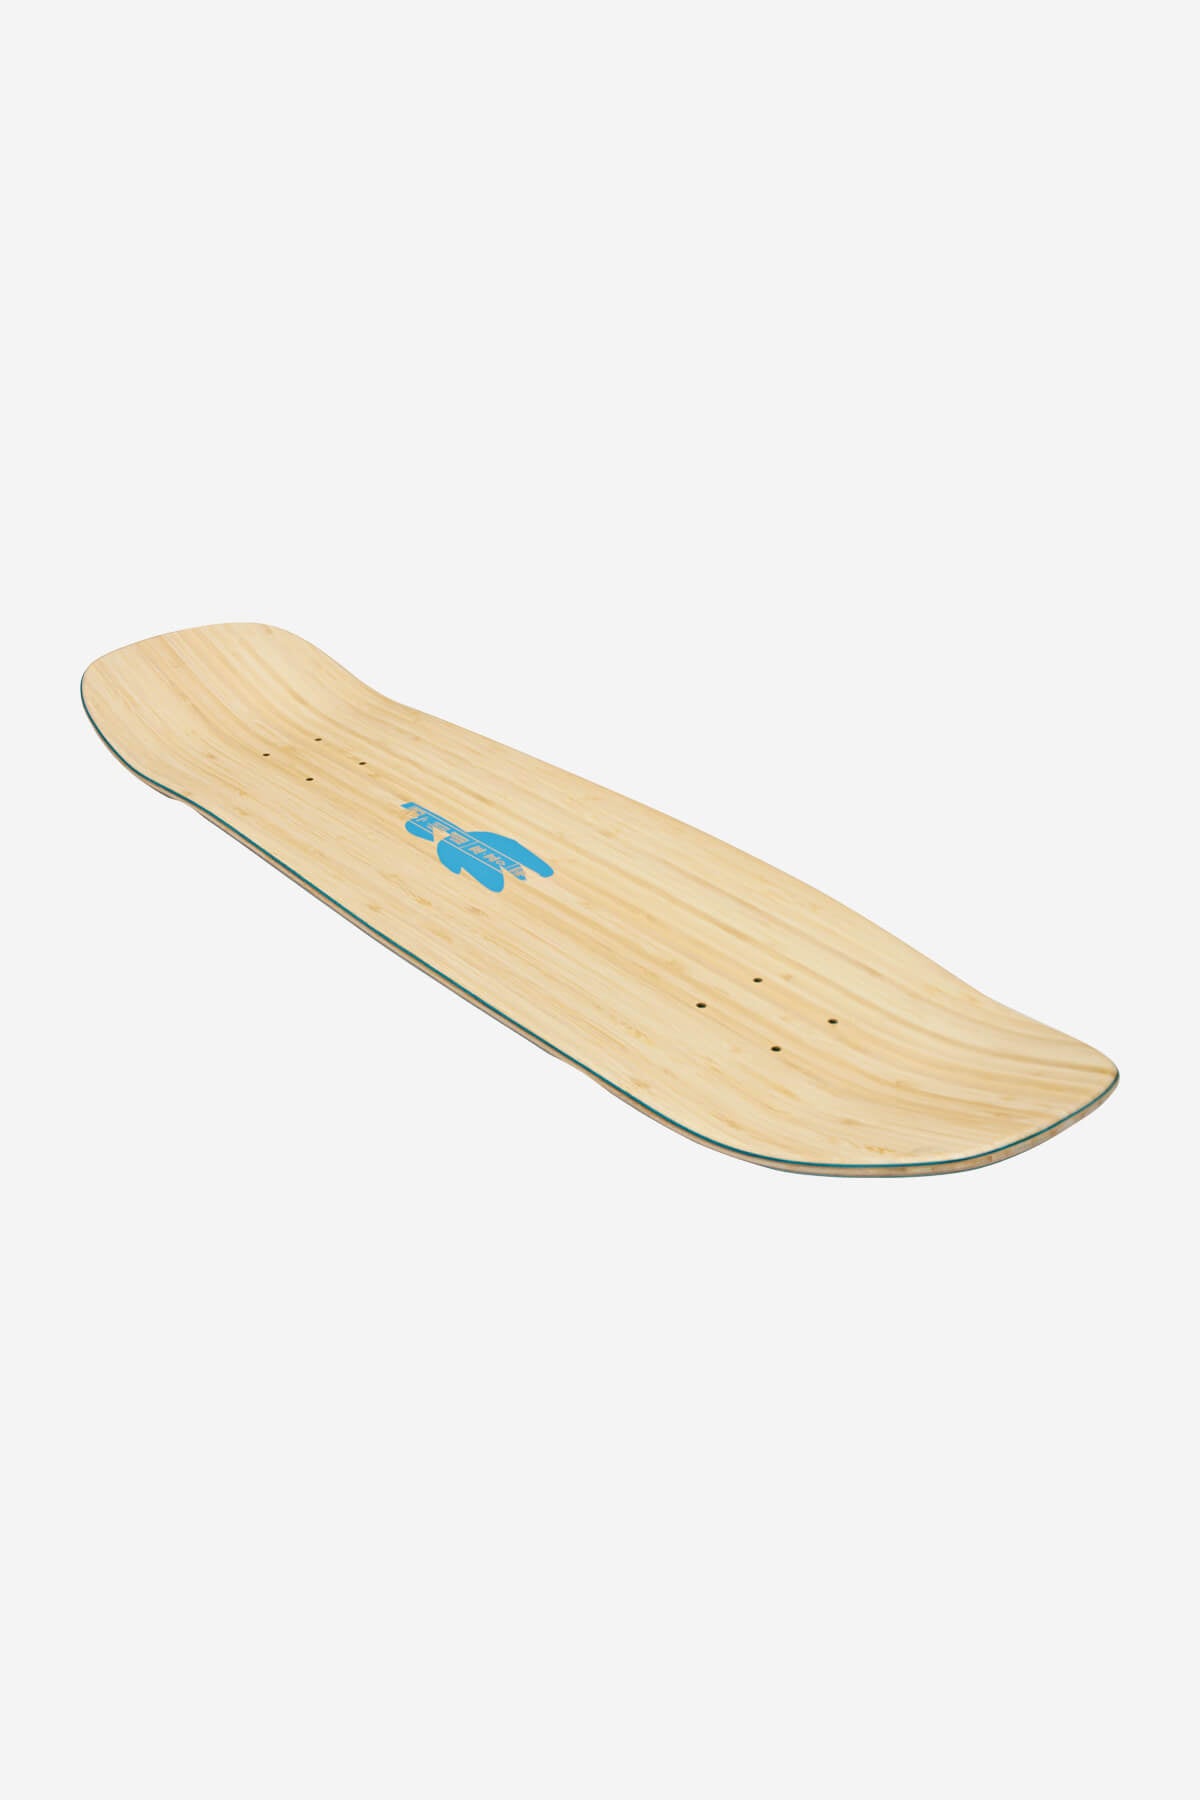 Globe - Disaster 2 - Bamboe/Vrij - 8,75" Skateboard Deck